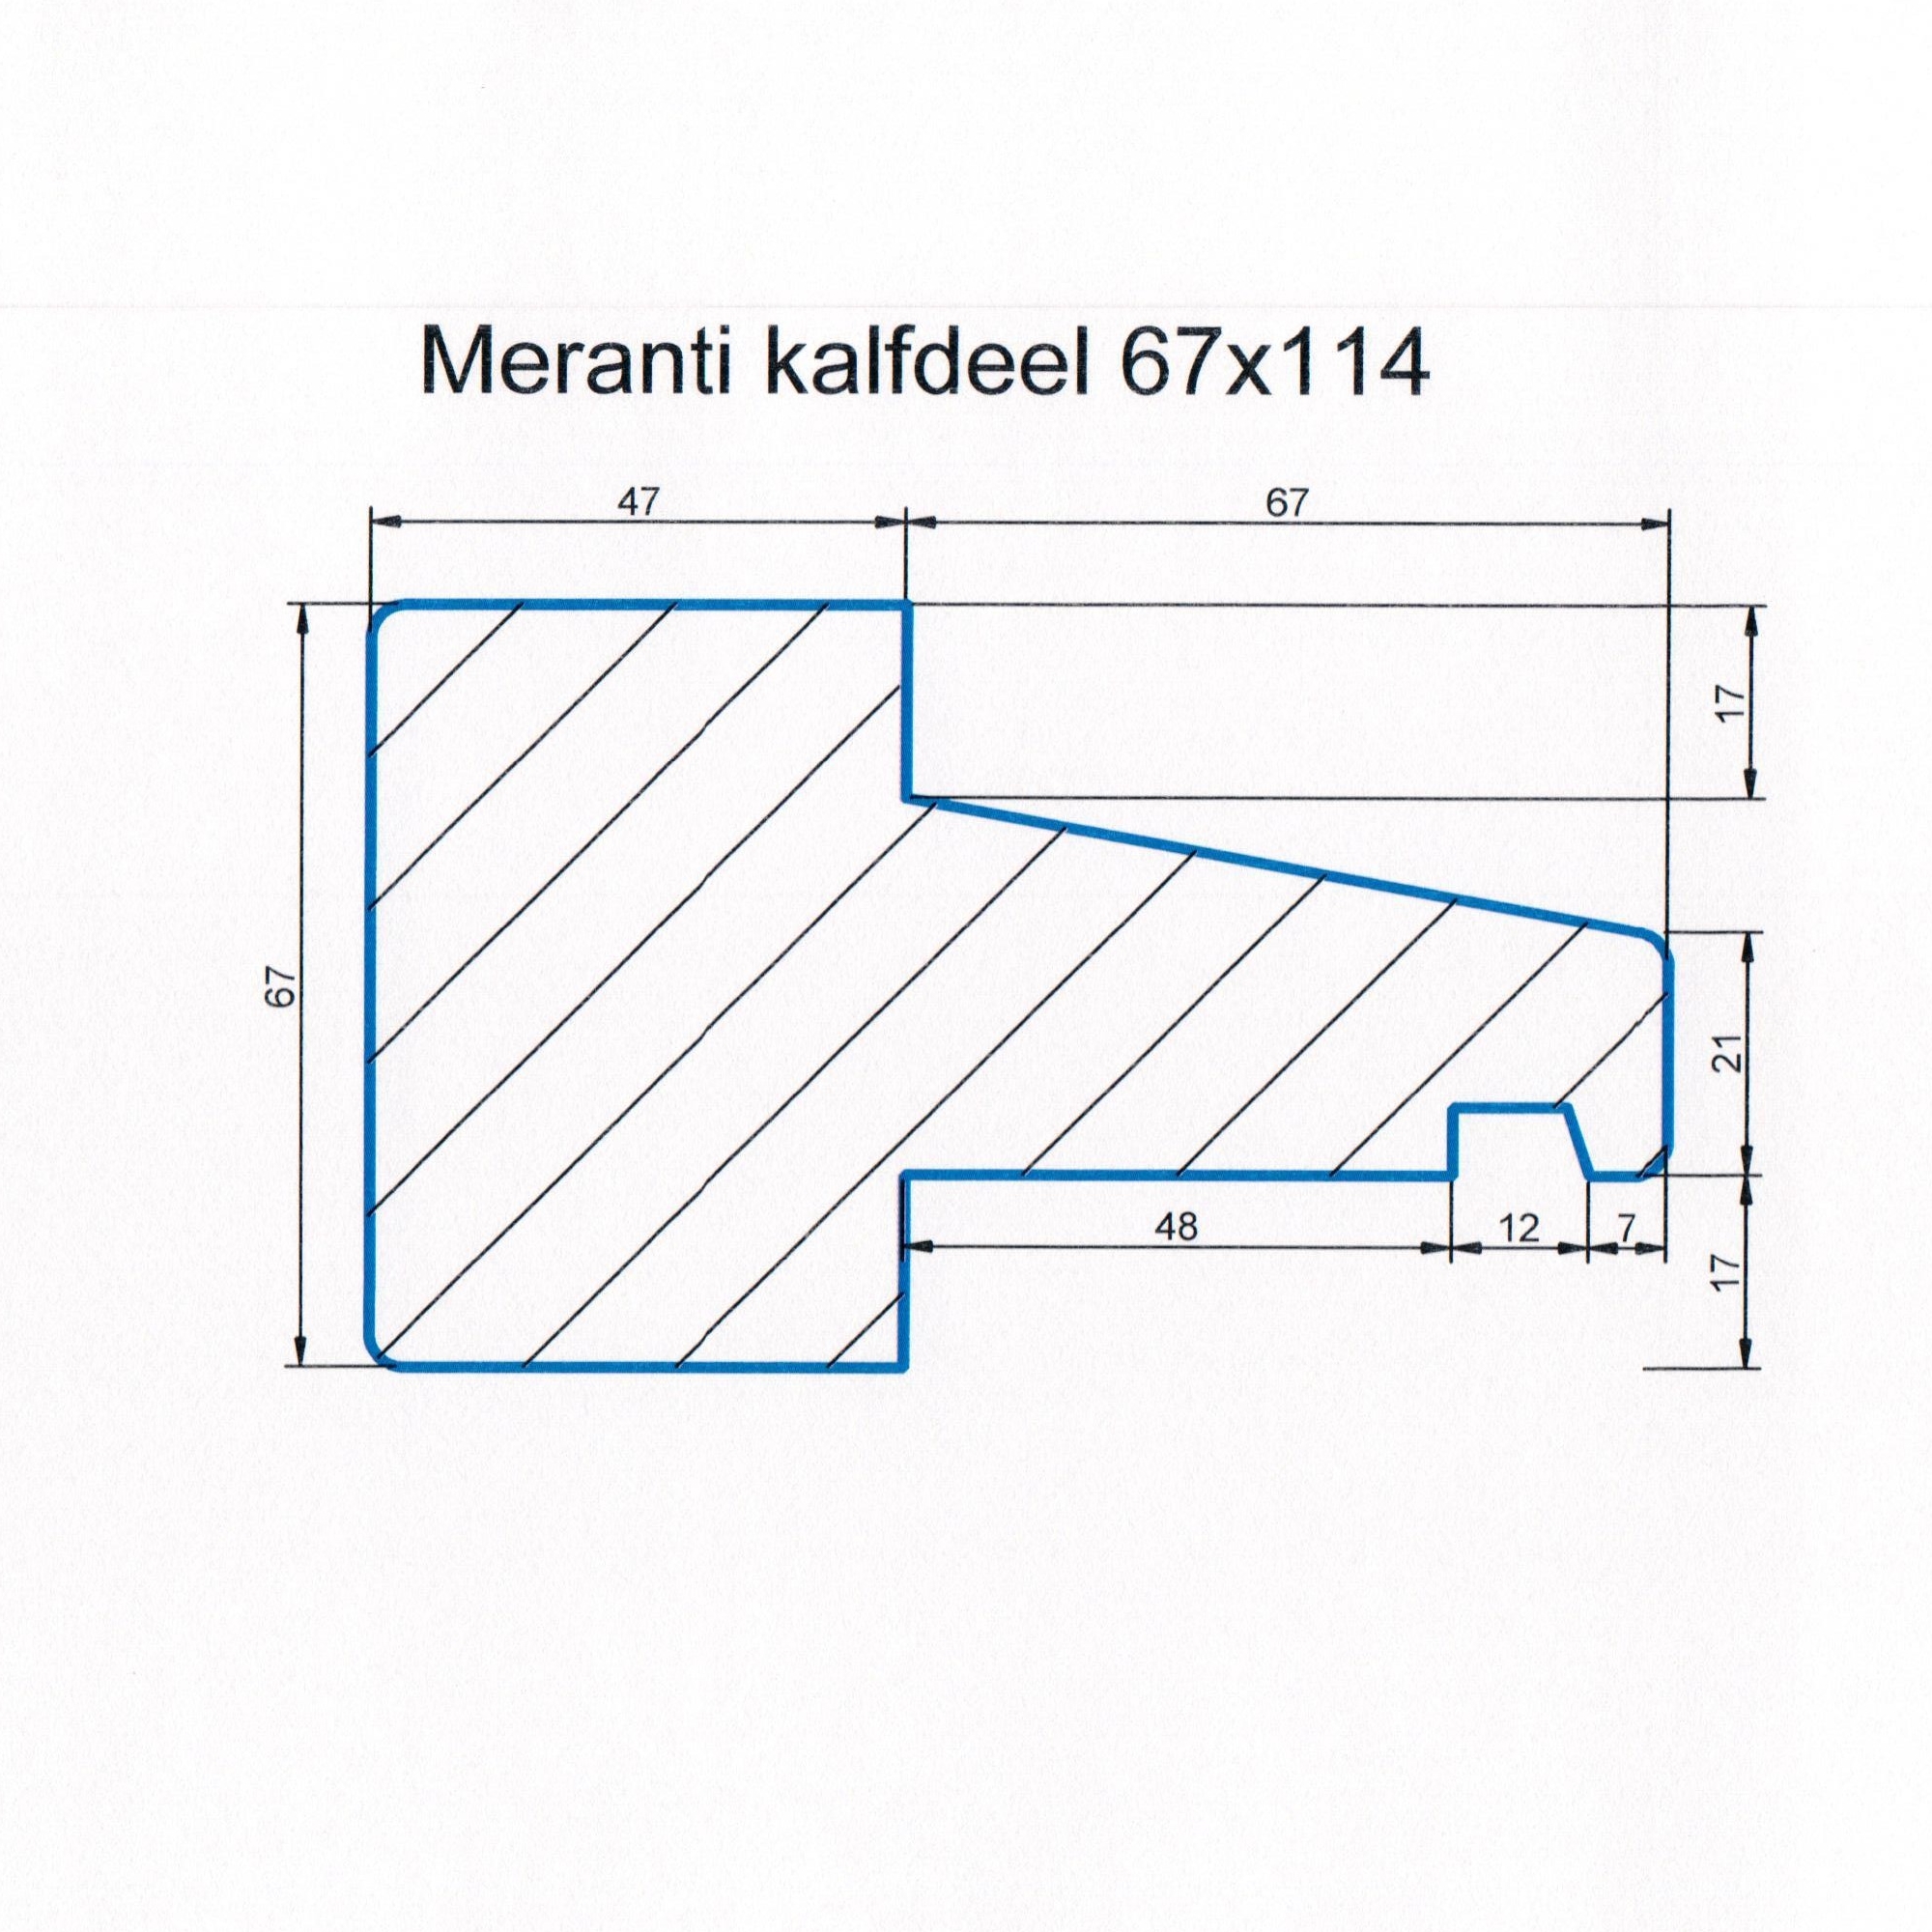 M1 Meranti 67x114 Kozijnhout Kalfdeel